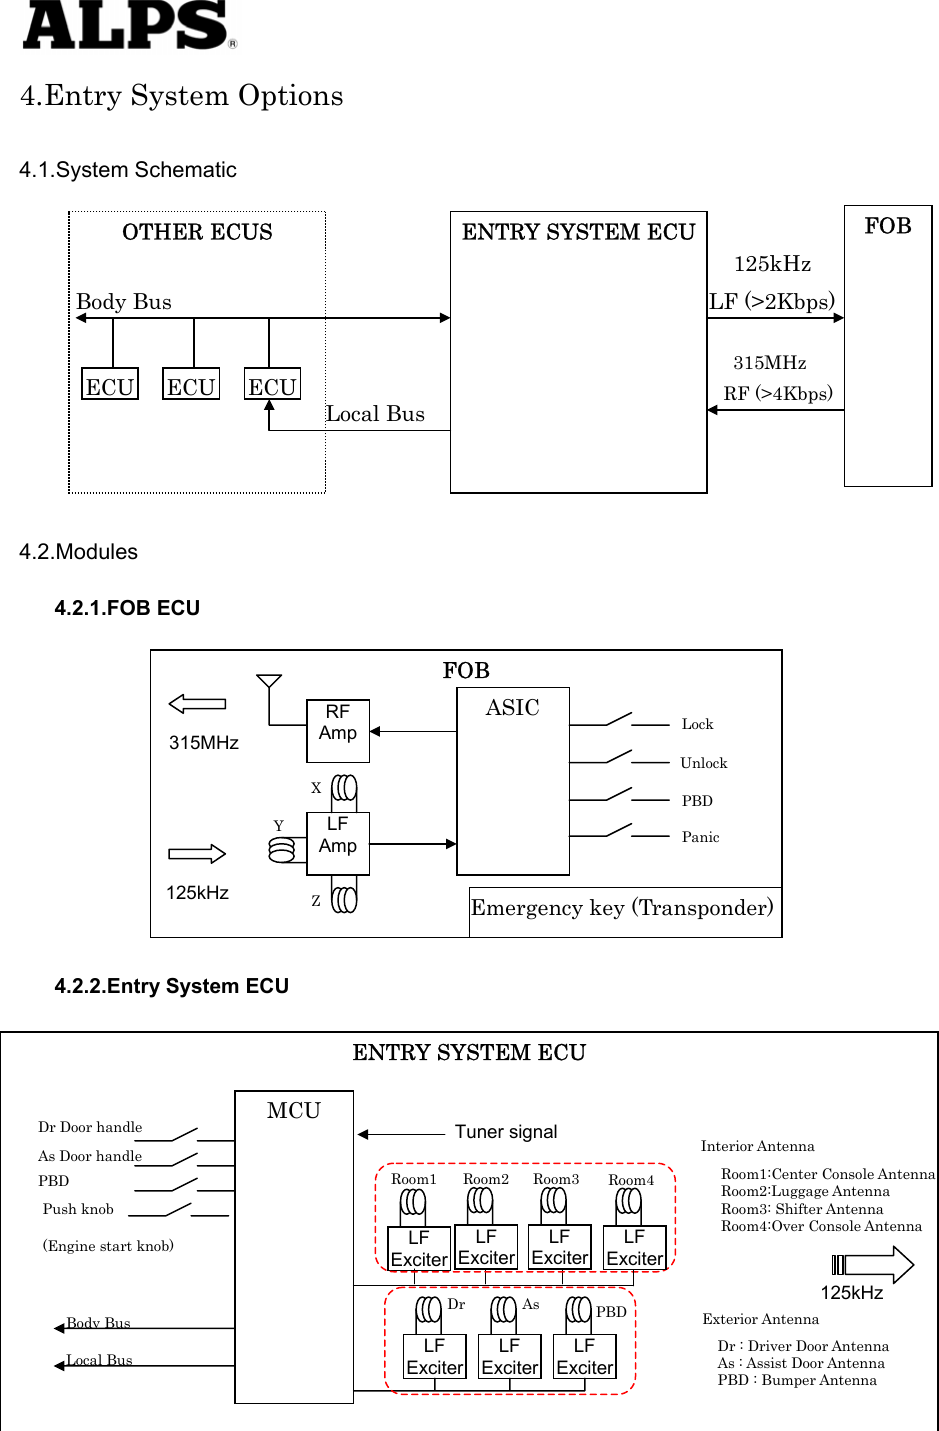   4.Entry System Options  4.1.System Schematic  Body Bus OTHER ECUS LF (&gt;2Kbps) Local Bus ECU ECU ECU315MHz RF (&gt;4Kbps) 125kHz FOB ENTRY SYSTEM ECU                4.2.Modules 4.2.1.FOB ECU   Panic 315MHz 125kHz  Emergency key (Transponder) PBD Unlock   Lock   Z FOB RF Amp LF Amp Y X ASIC              4.2.2.Entry System ECU  Room4 LF ExciterTuner signal Room2 Room3 LF ExciterLF ExciterInterior Antenna Room1:Center Console Antenna Room2:Luggage Antenna   Room3: Shifter Antenna Room4:Over Console Antenna Exterior Antenna Dr : Driver Door Antenna As : Assist Door Antenna PBD : Bumper Antenna 125kHz PBD As Dr Room1 LF ExciterLF ExciterLF ExciterLF ExciterLocal Bus Body Bus Push knob (Engine start knob) Dr Door handle As Door handle PBD MCU ENTRY SYSTEM ECU 